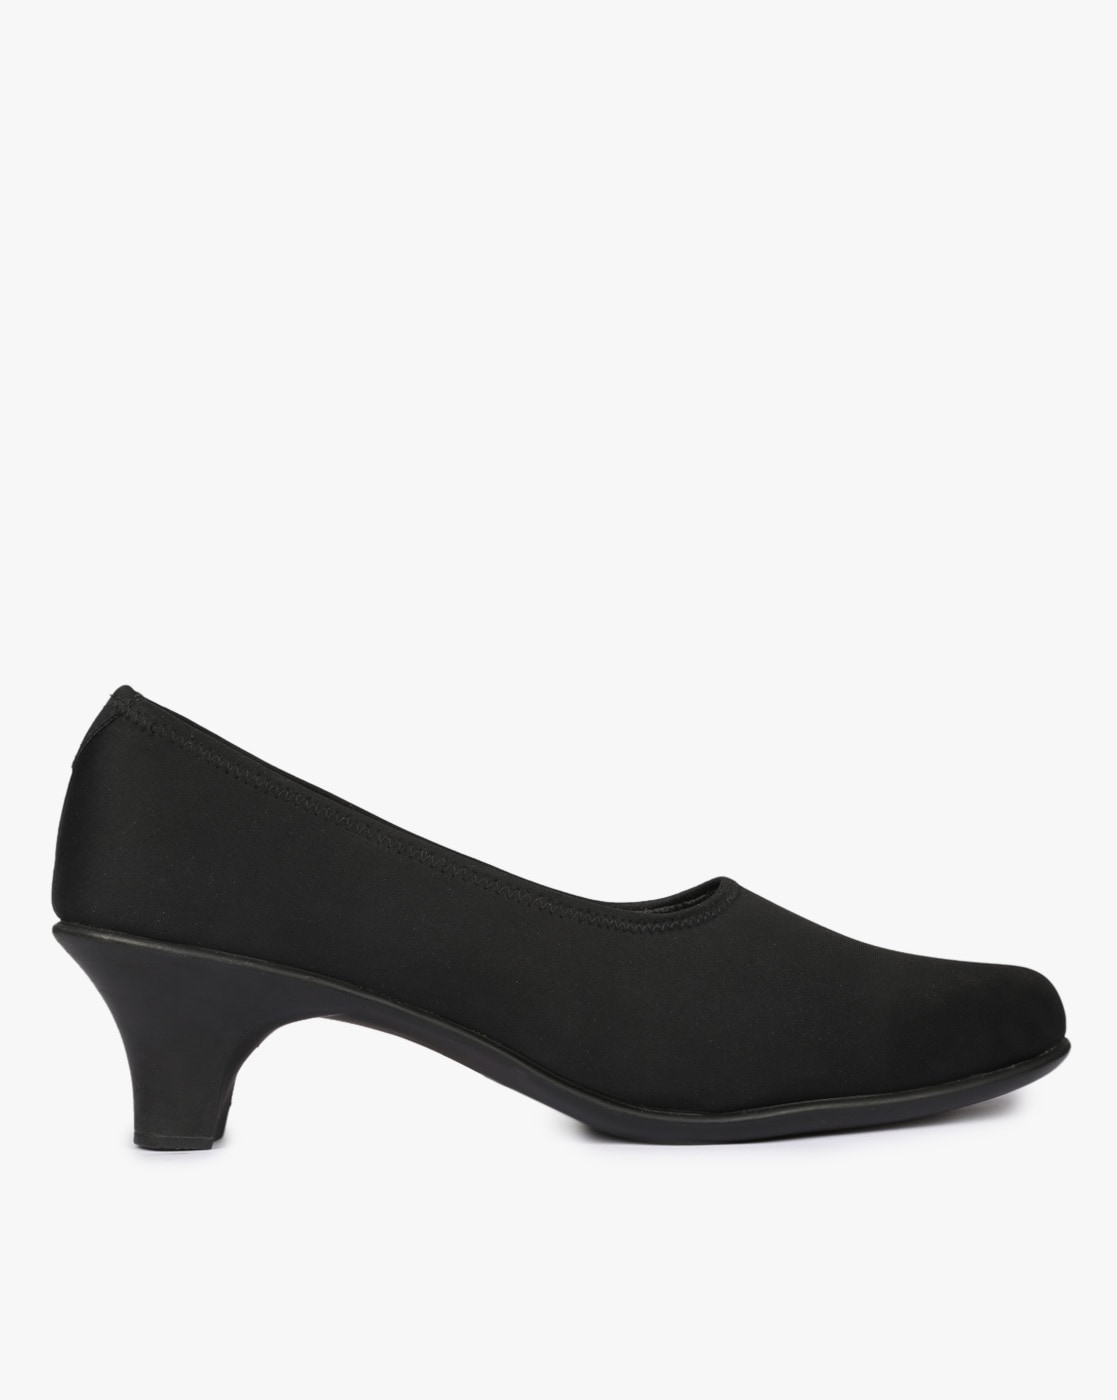 Smith Women's Italian 18803 Lace Up Low Heel Shoes Black